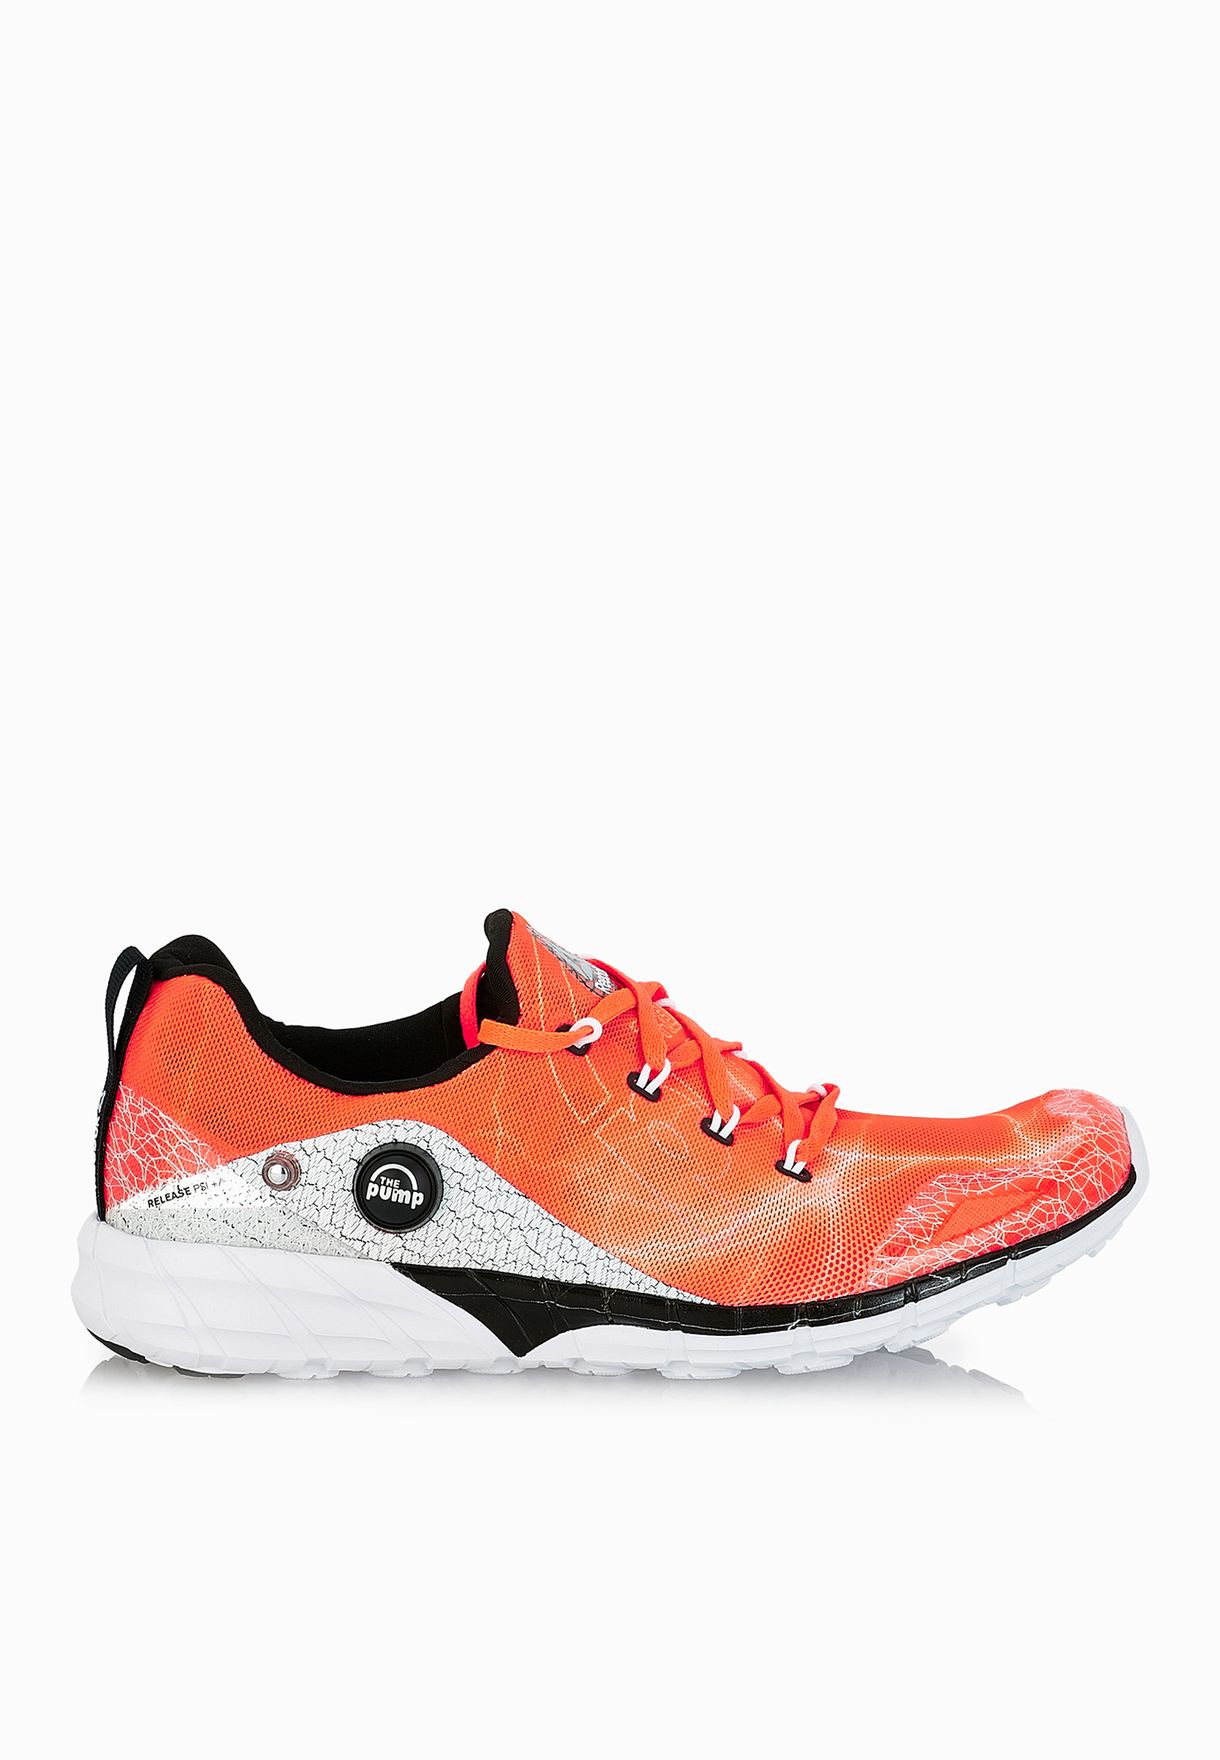 reebok pump shoes orange